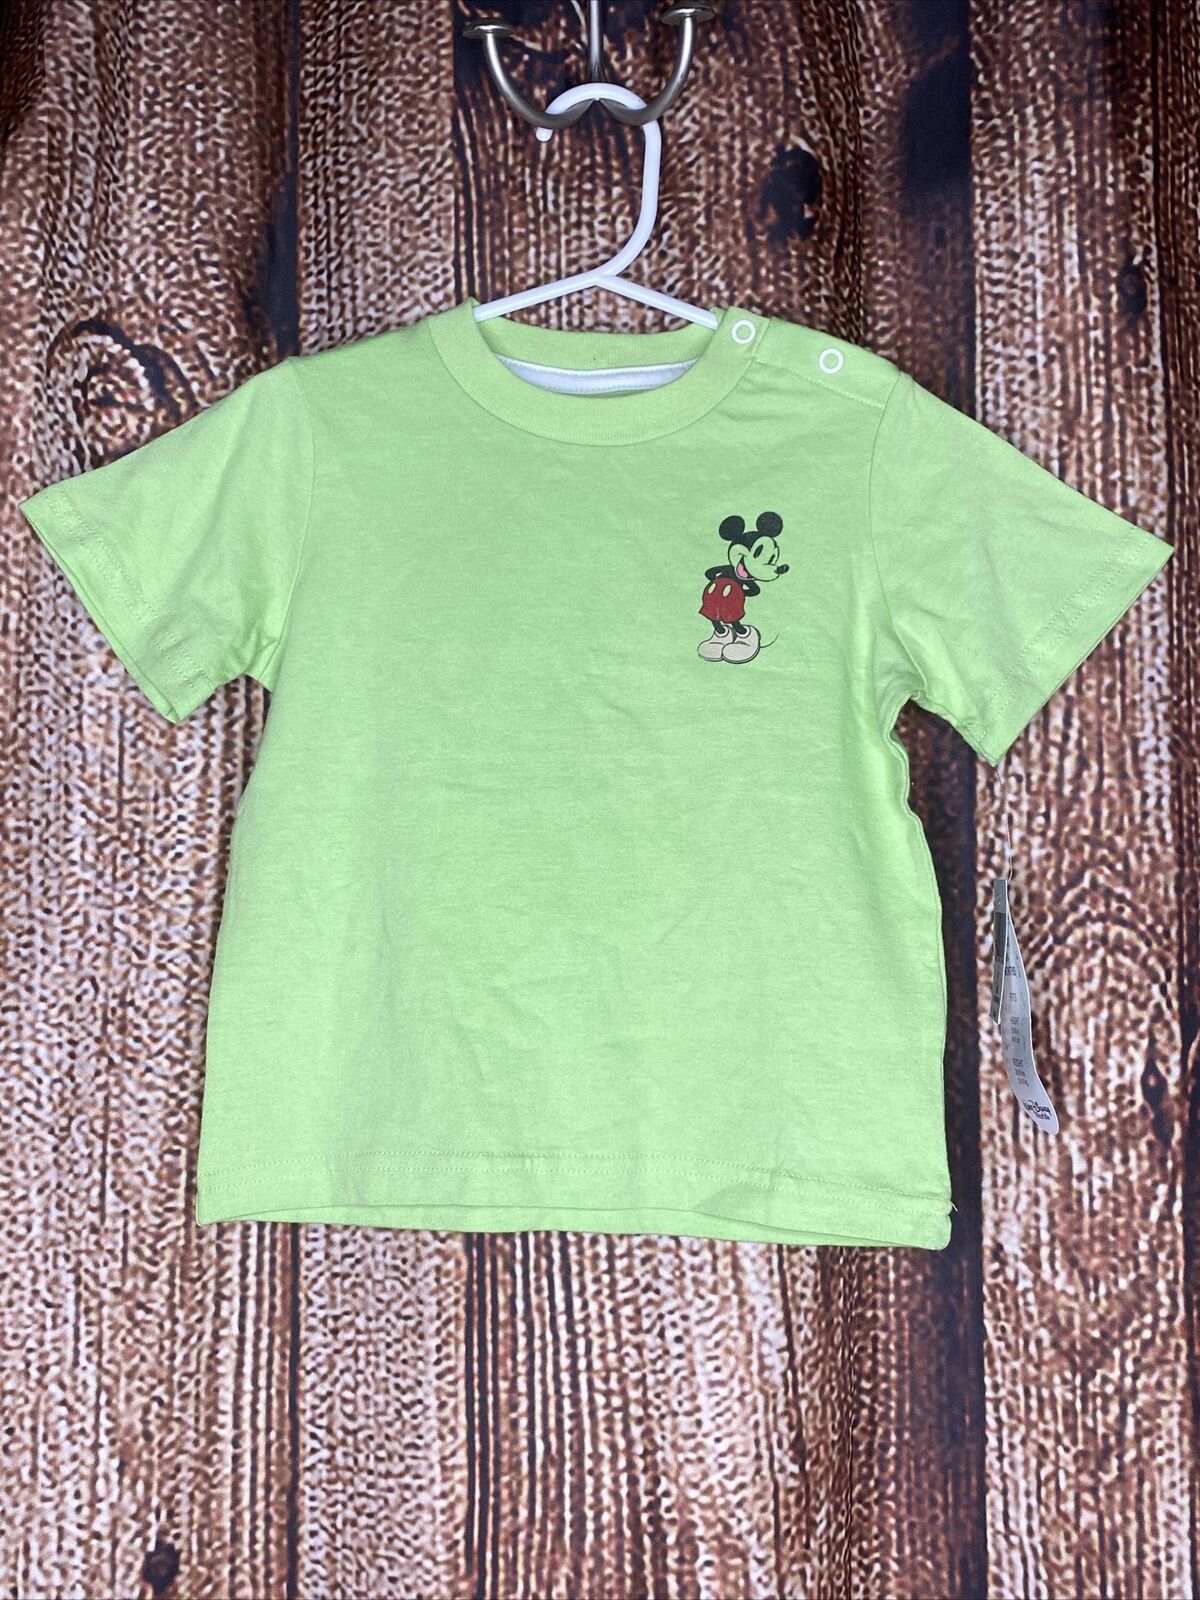 Disneyland Disney World Mickey Mouse T-Shirt Baby Toddler SZ 24 Months NWT